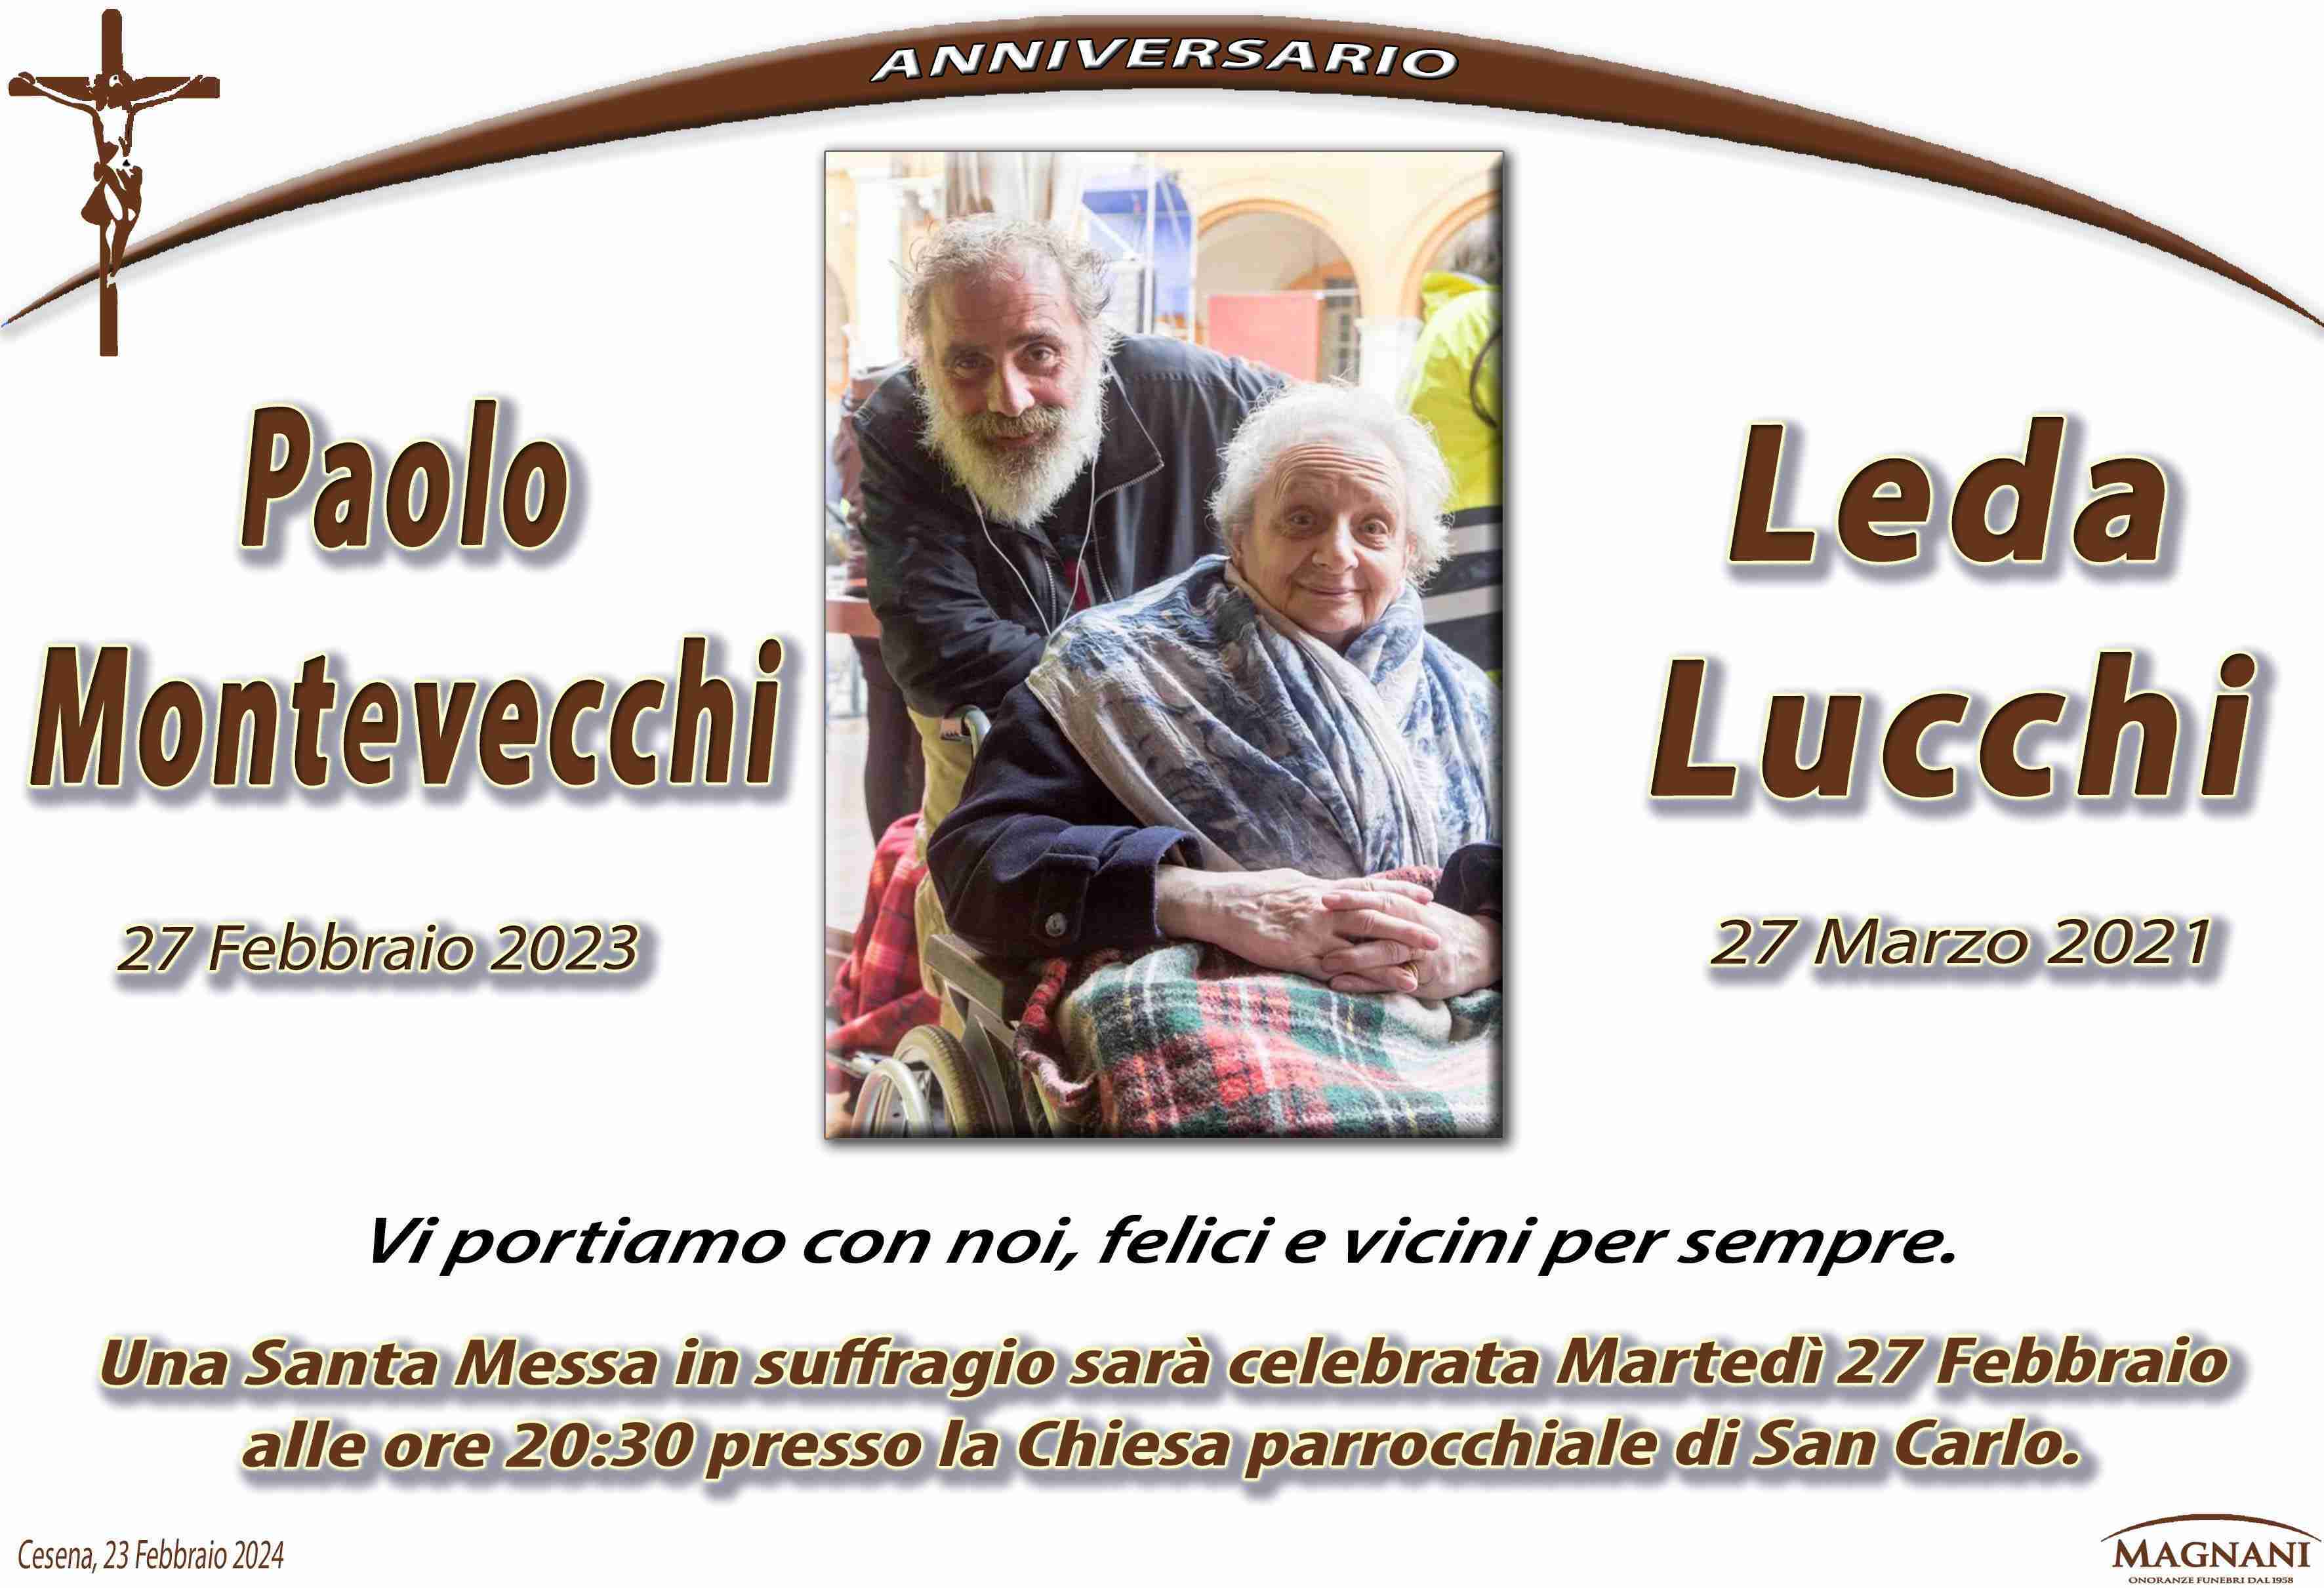 Paolo Montevecchi e Leda Lucchi